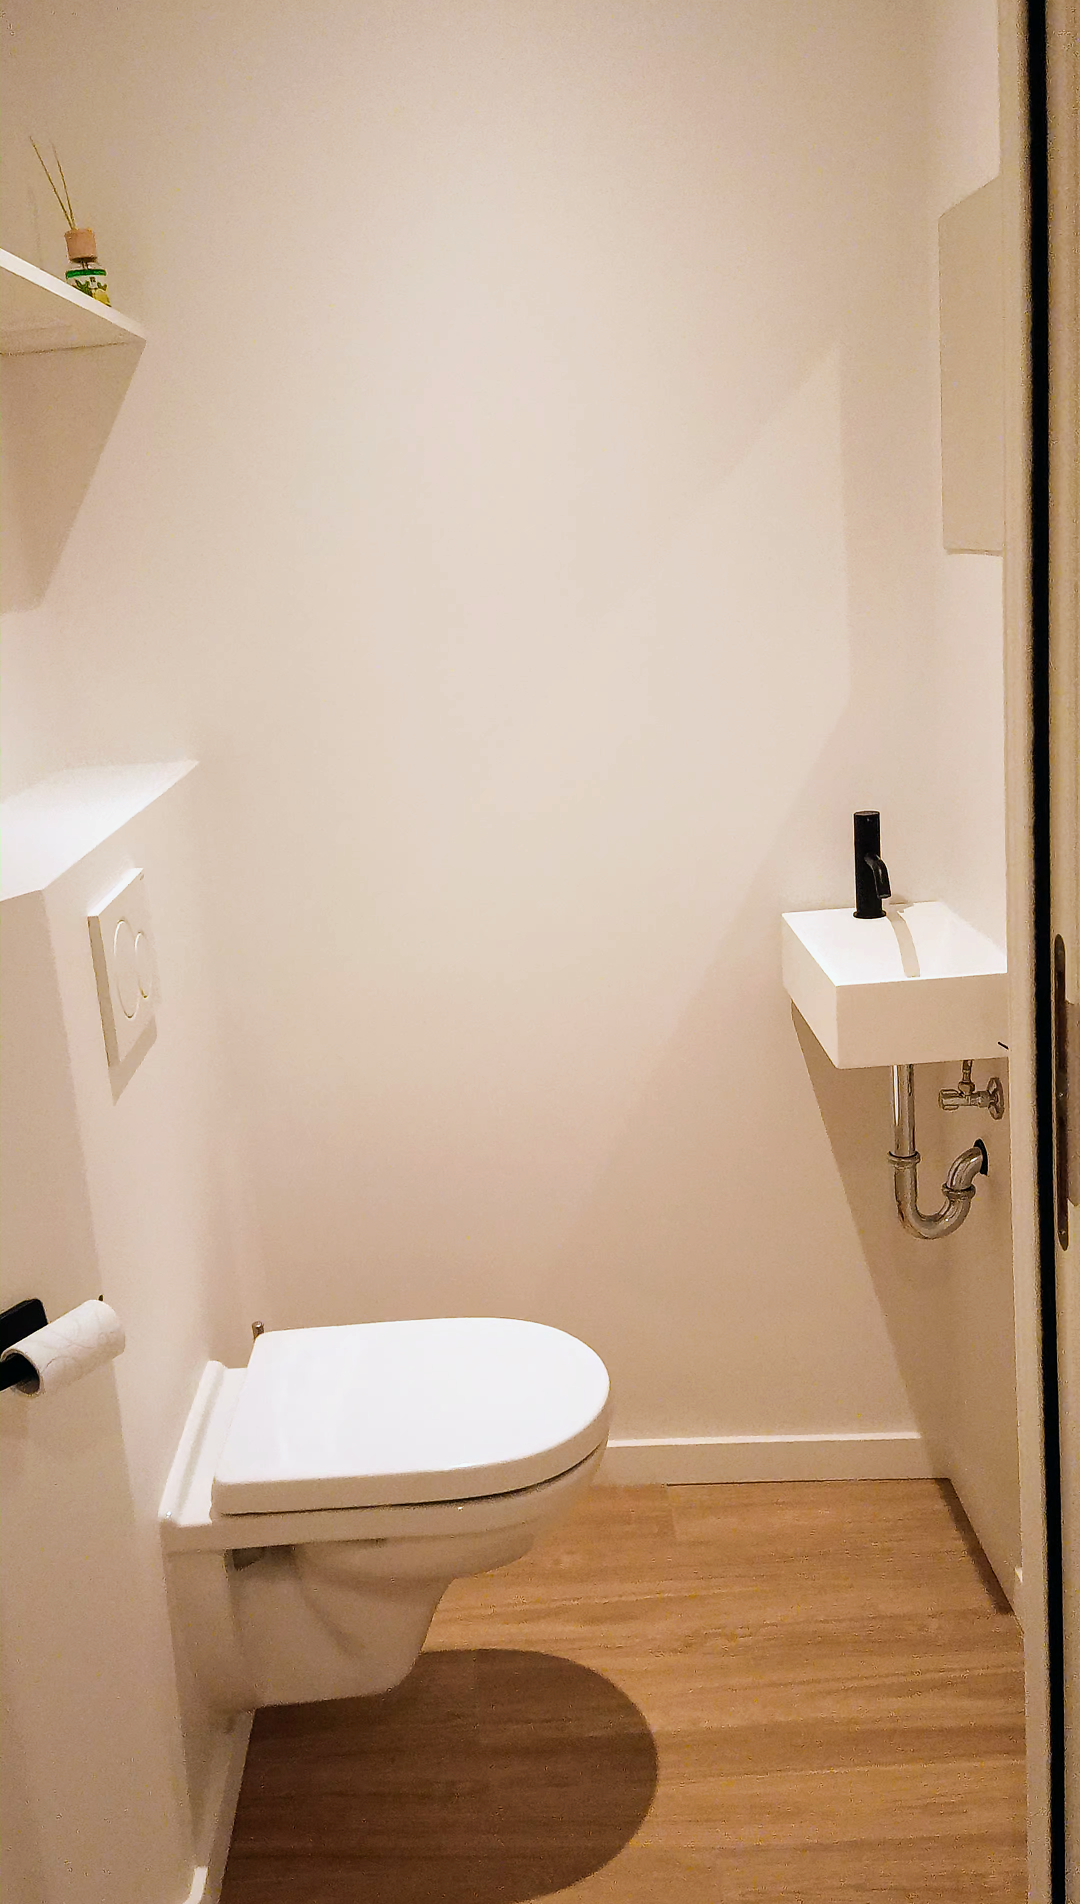 Salvatore - 2 Bedrooms apartment for rent in Ghent bathroom